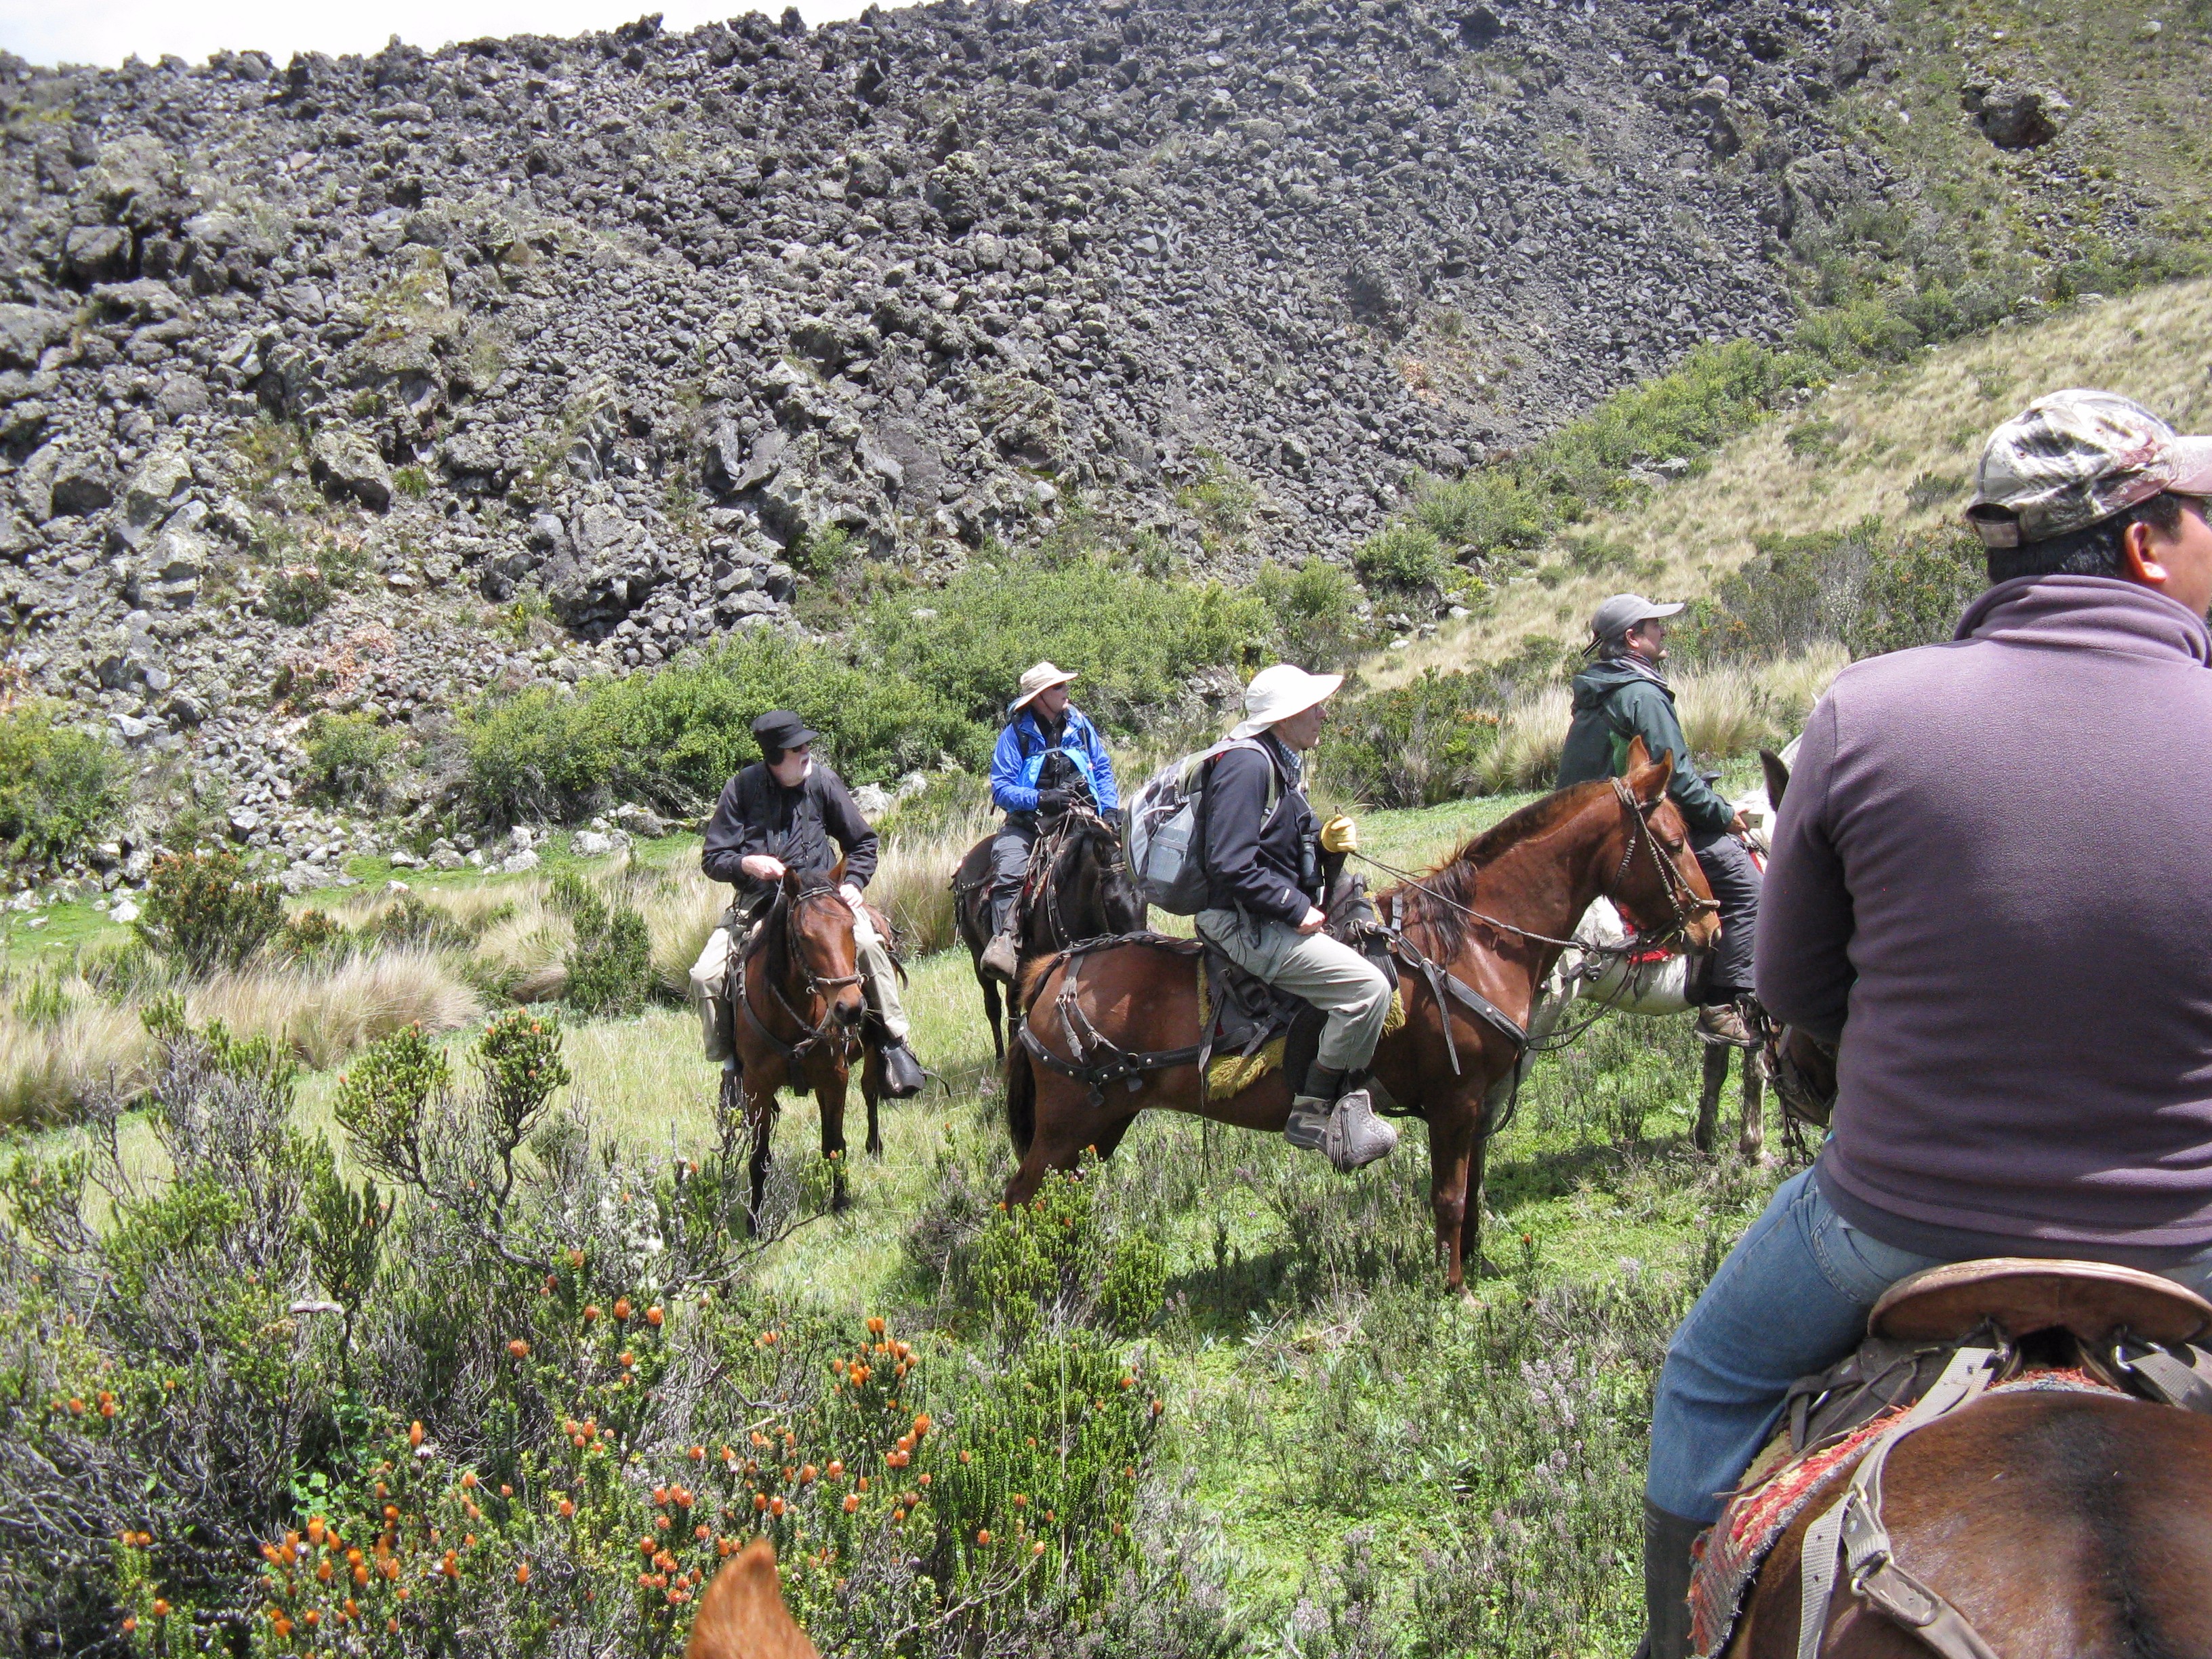 Horseback adventure for the team in Ecuador.